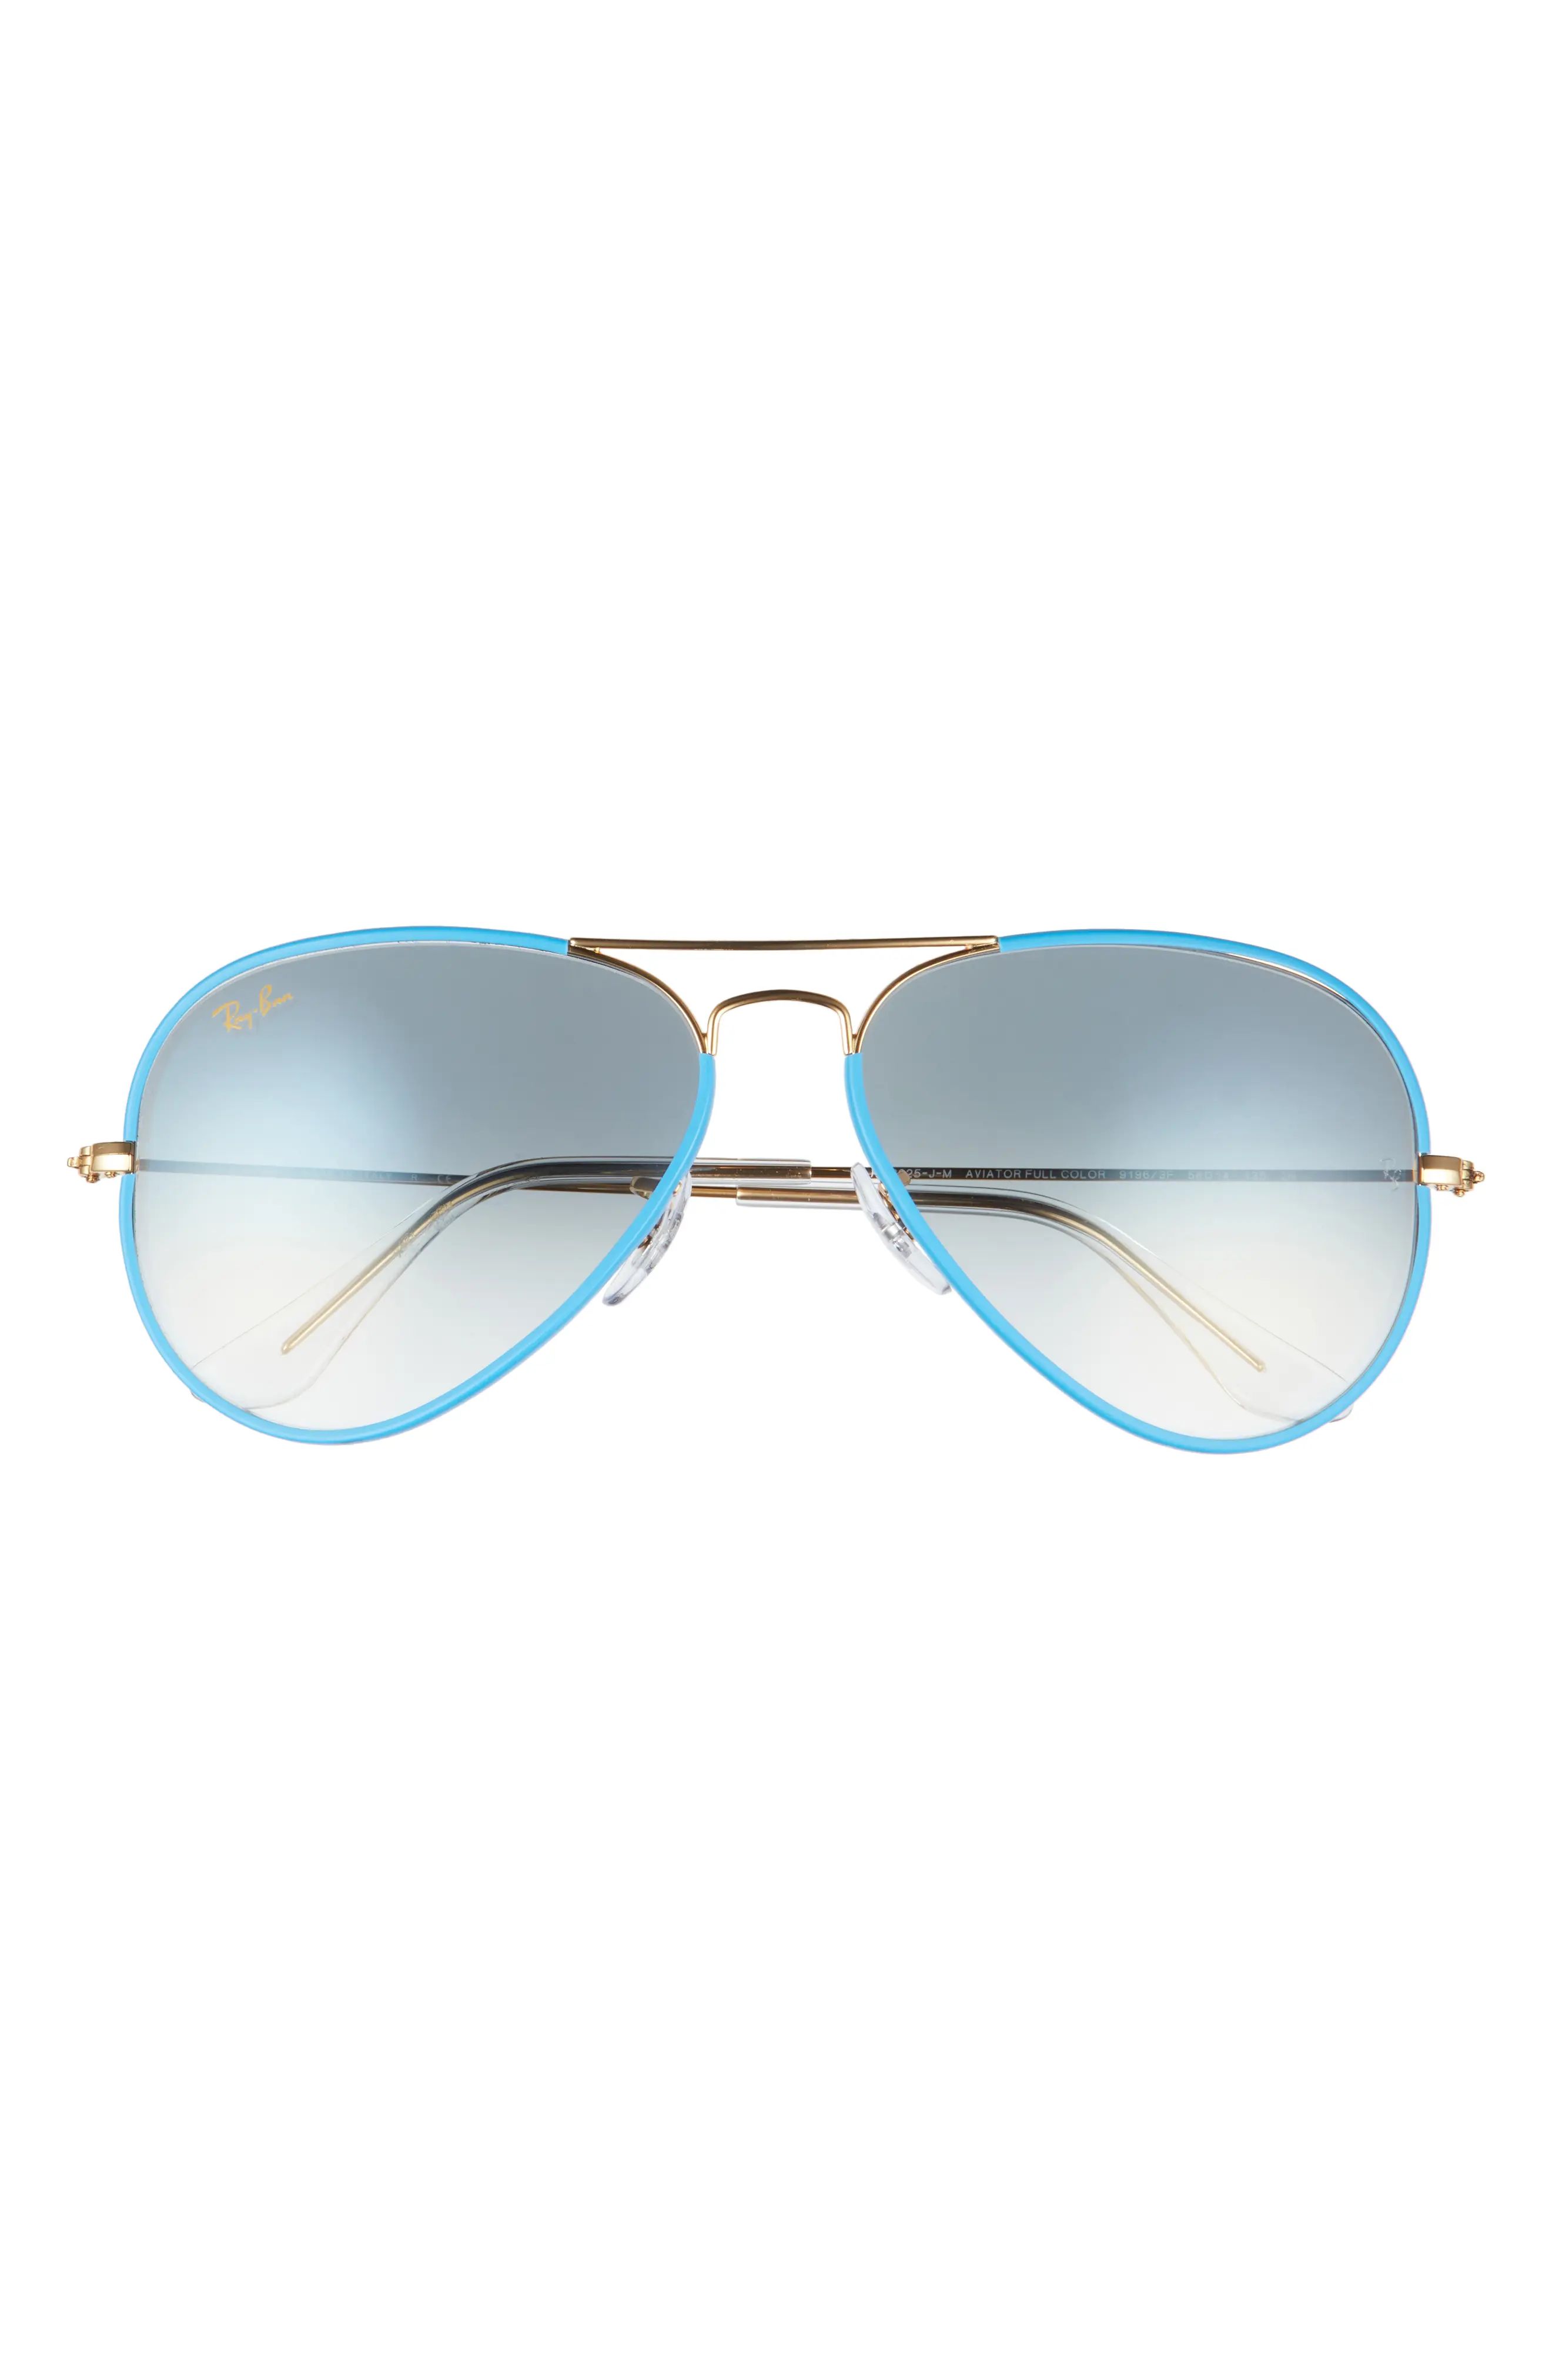 Women's Ray-Ban Aviator 58mm Sunglasses - Lgt Blue Gold/ Clear Grad Blue | Nordstrom